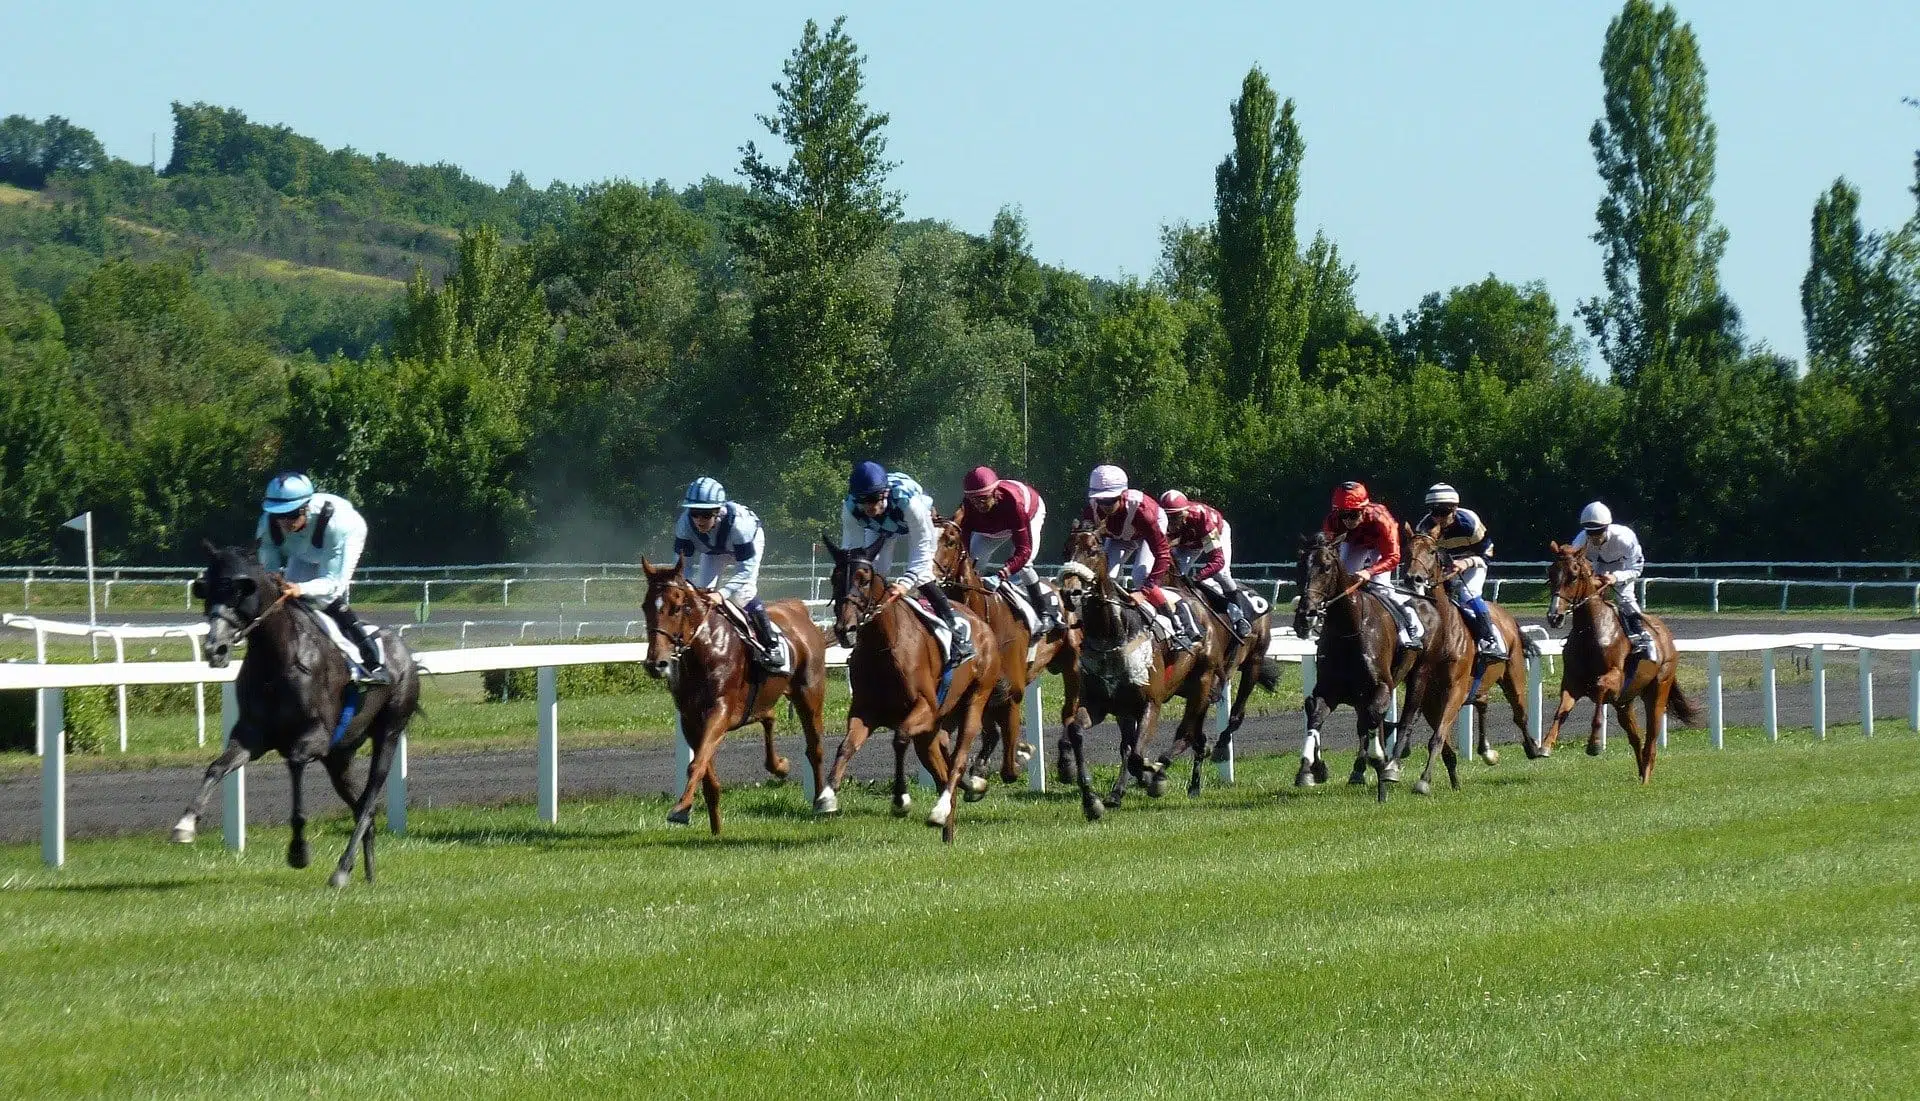 Jockeys on their horses race to the finish line